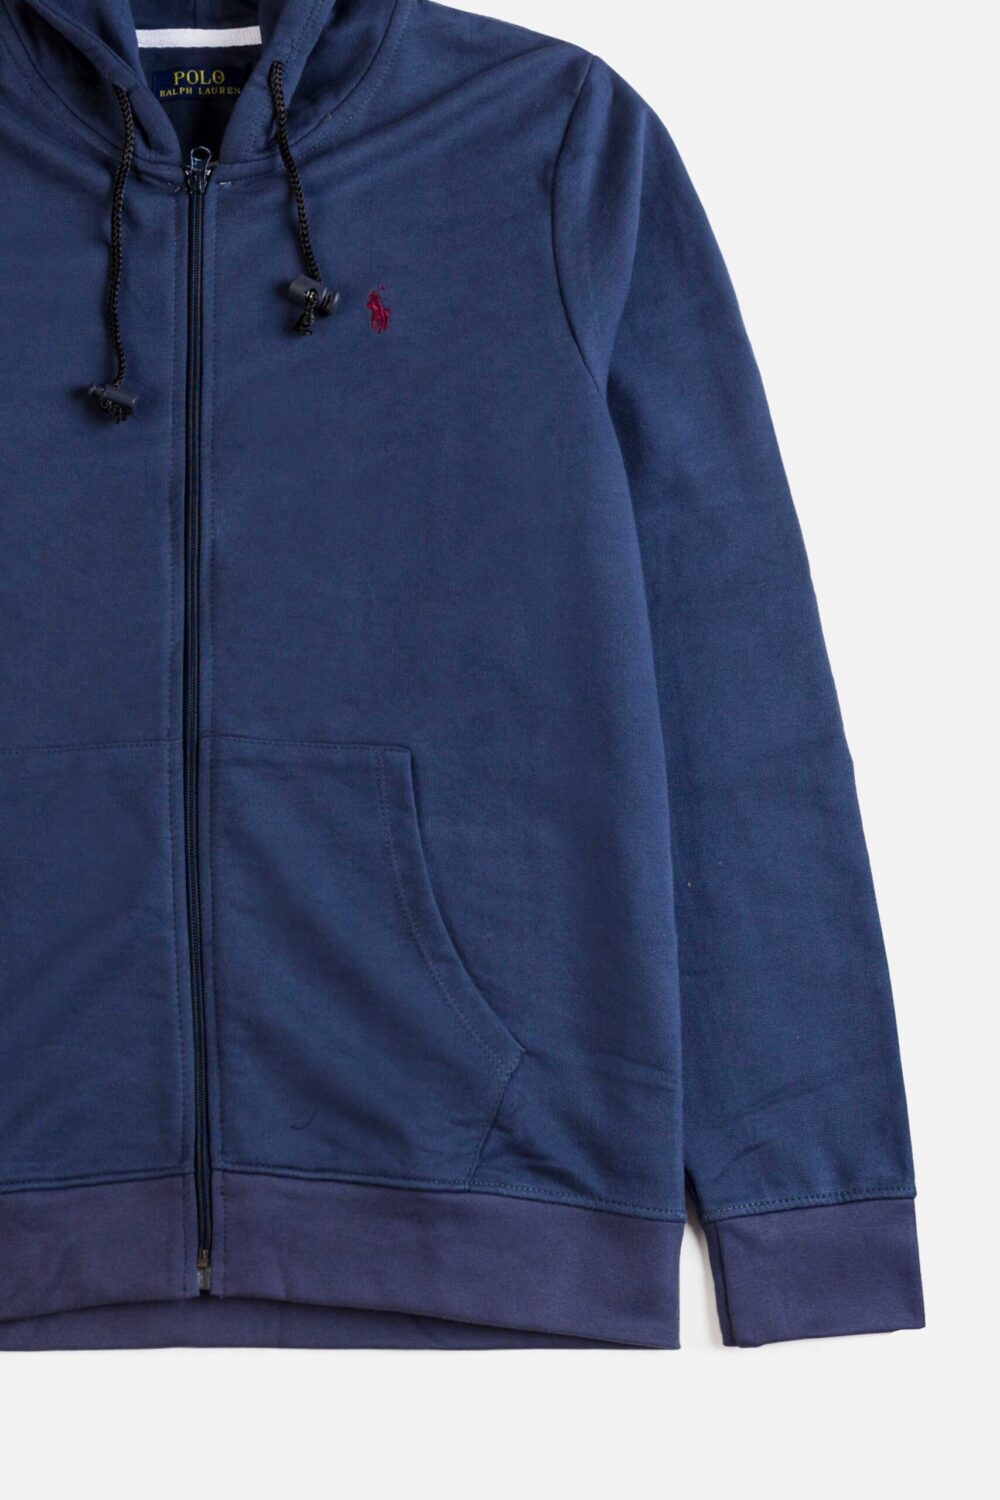 RL Premium Fleece Basic Hoodie – Navy Blue With Red Pony